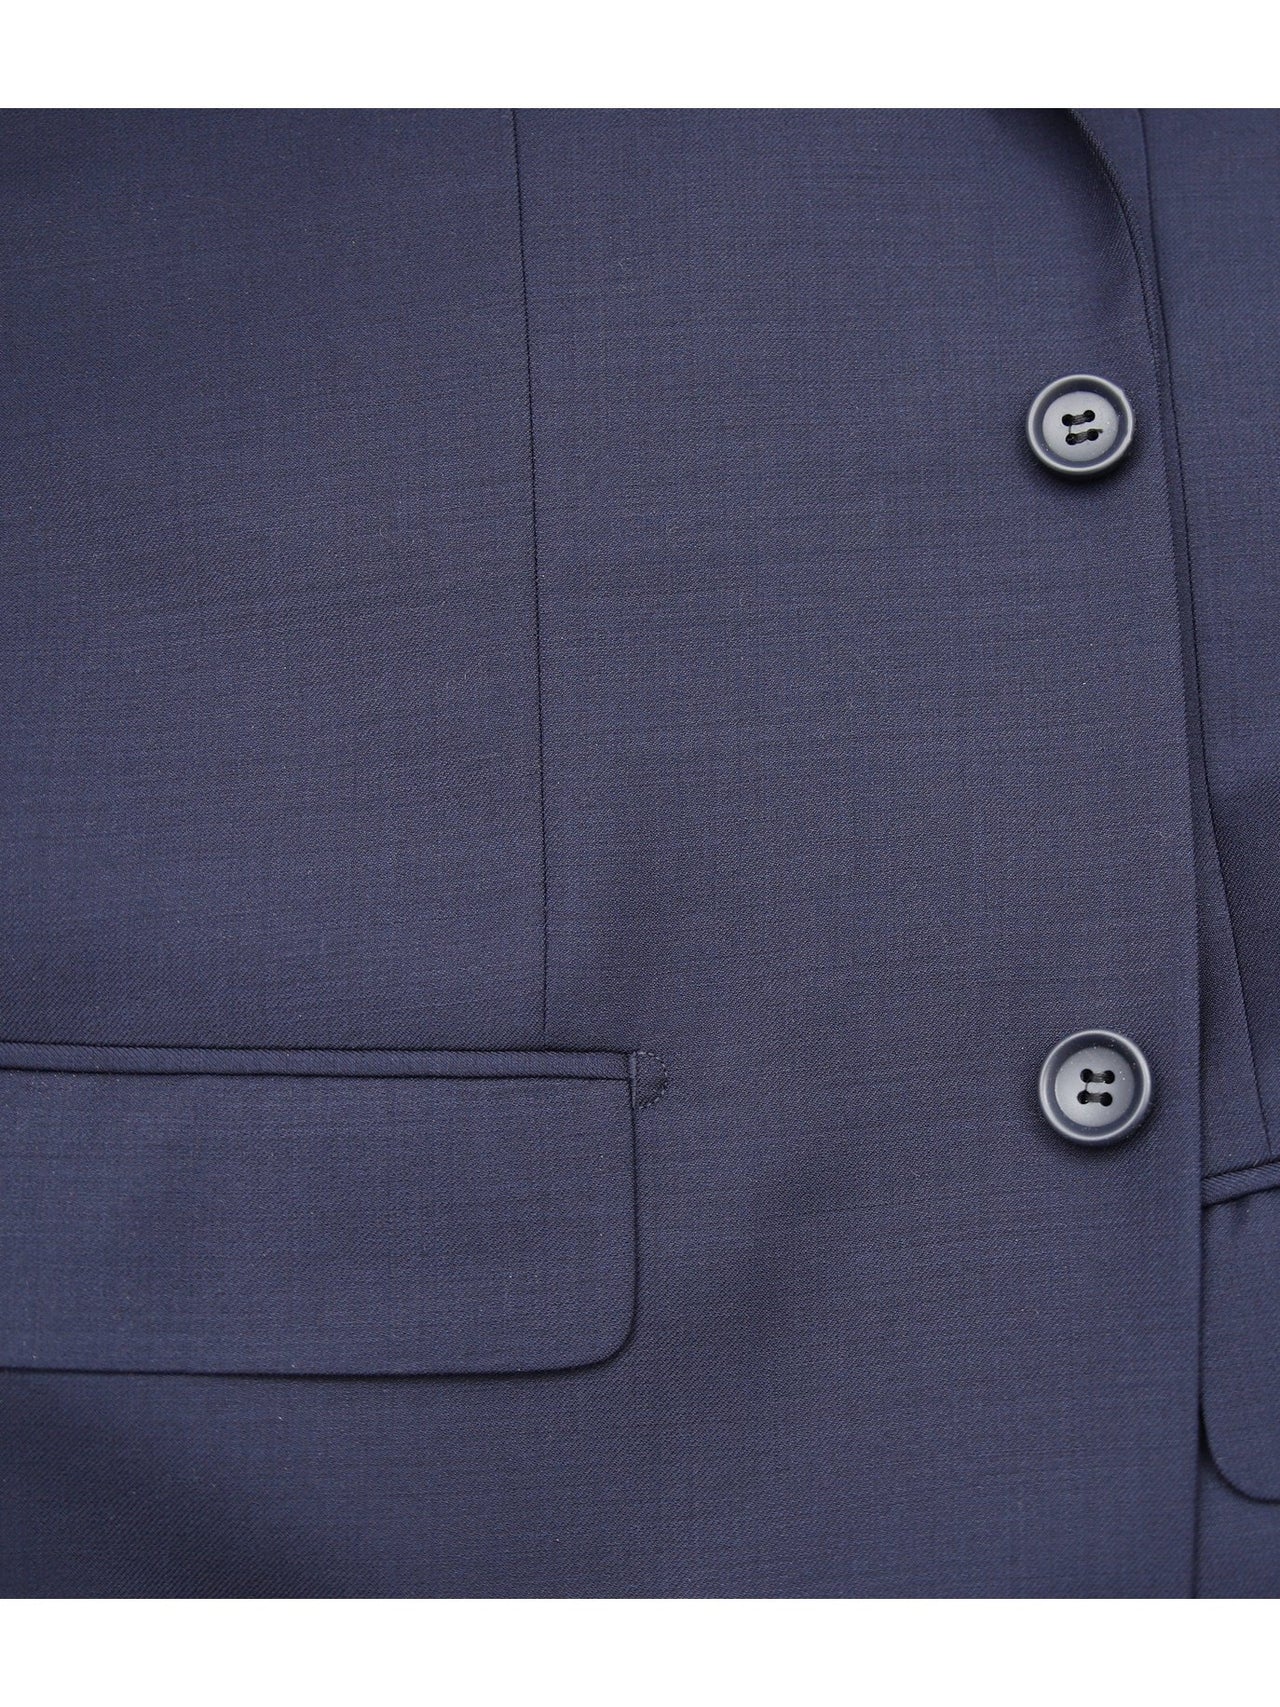 Label M Label M Mens Solid Navy Blue Two Button Wool Blazer Suit Jacket